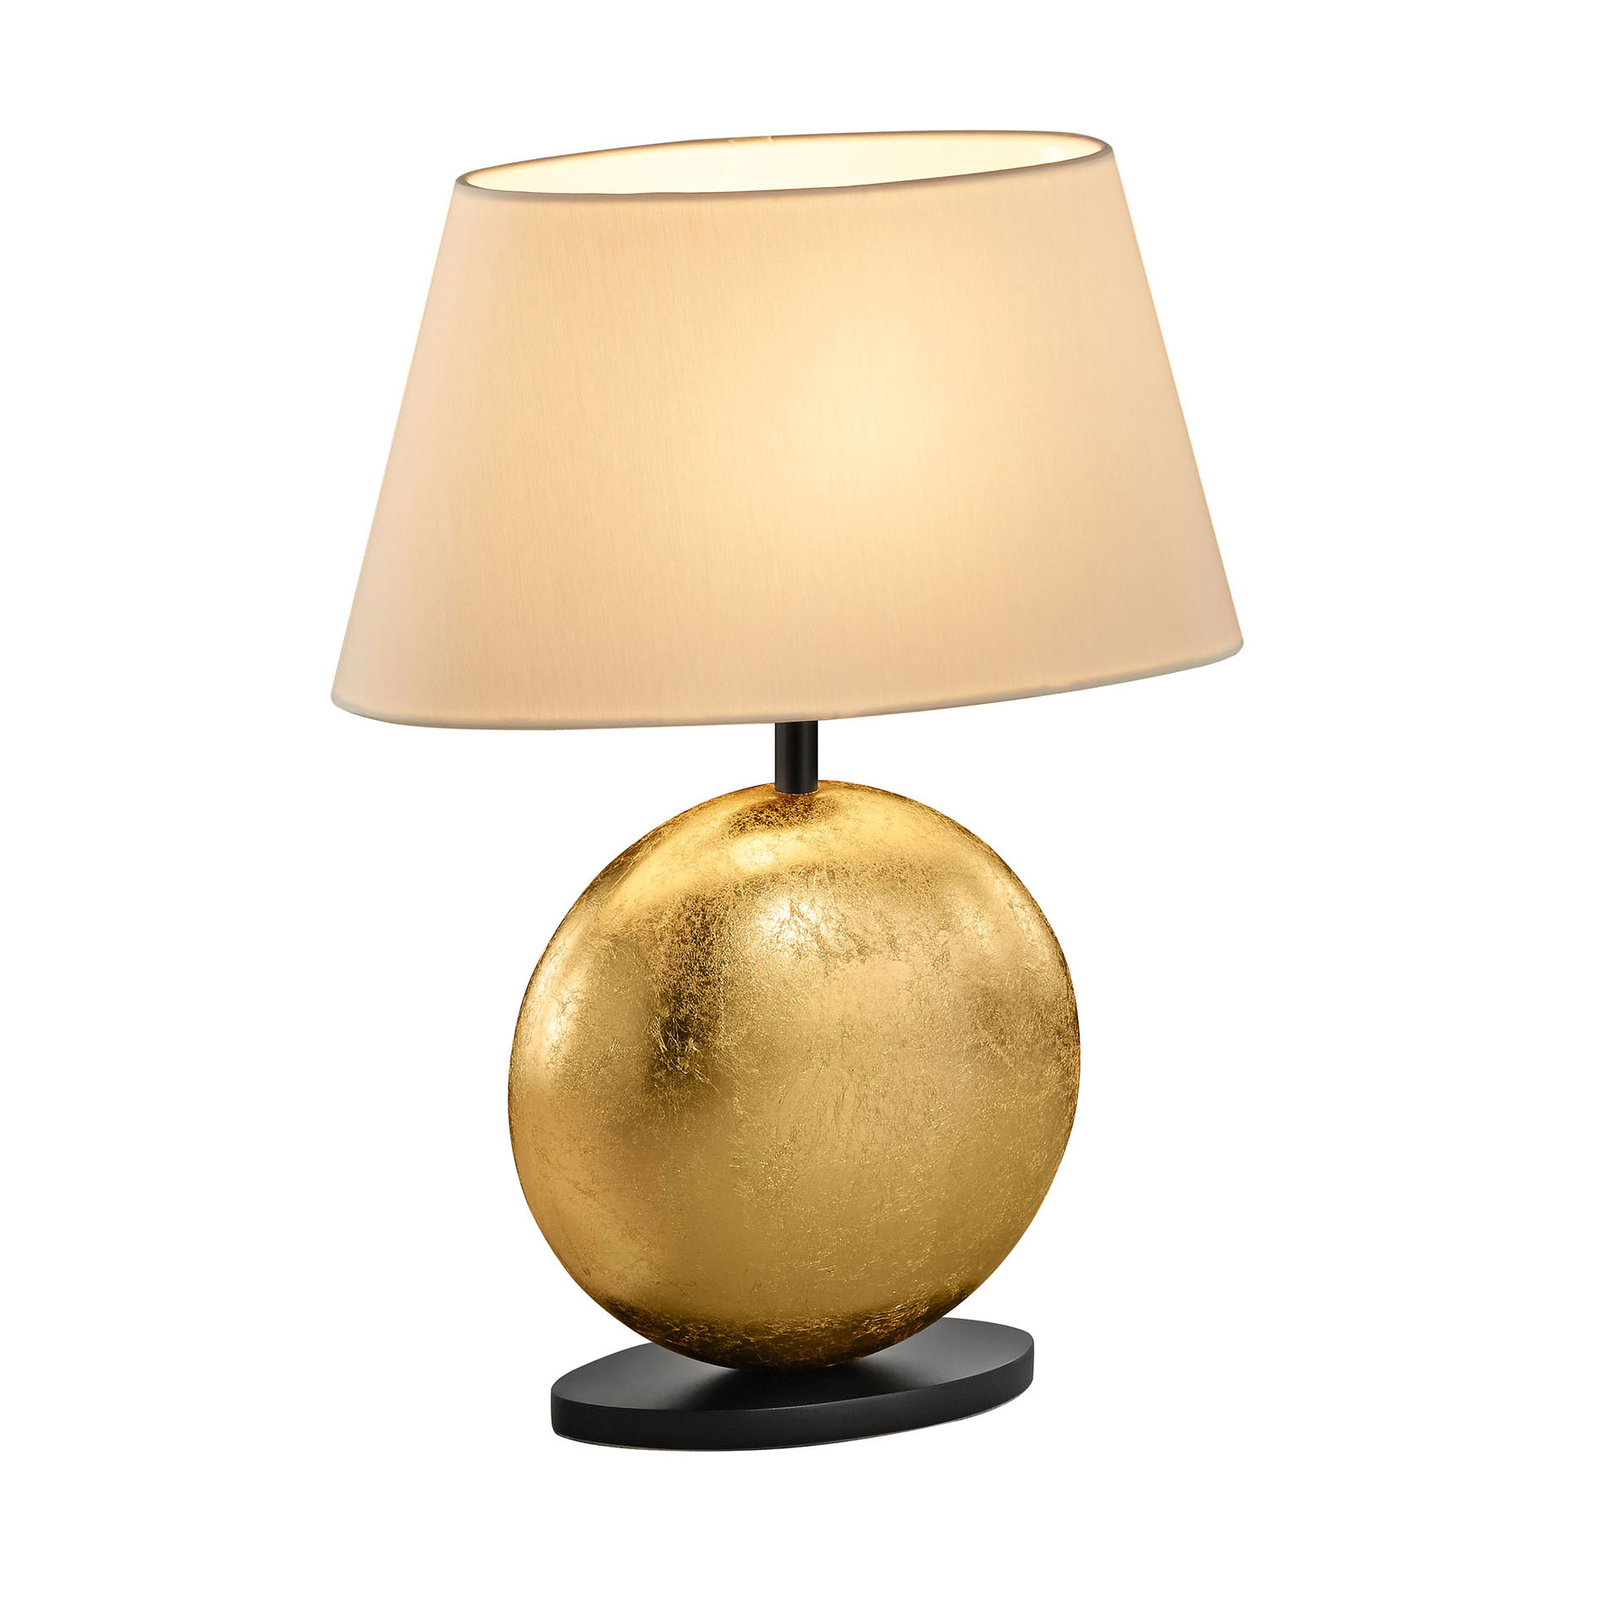 BANKAMP Mali lámpara de mesa, crema/oro, alto 41cm